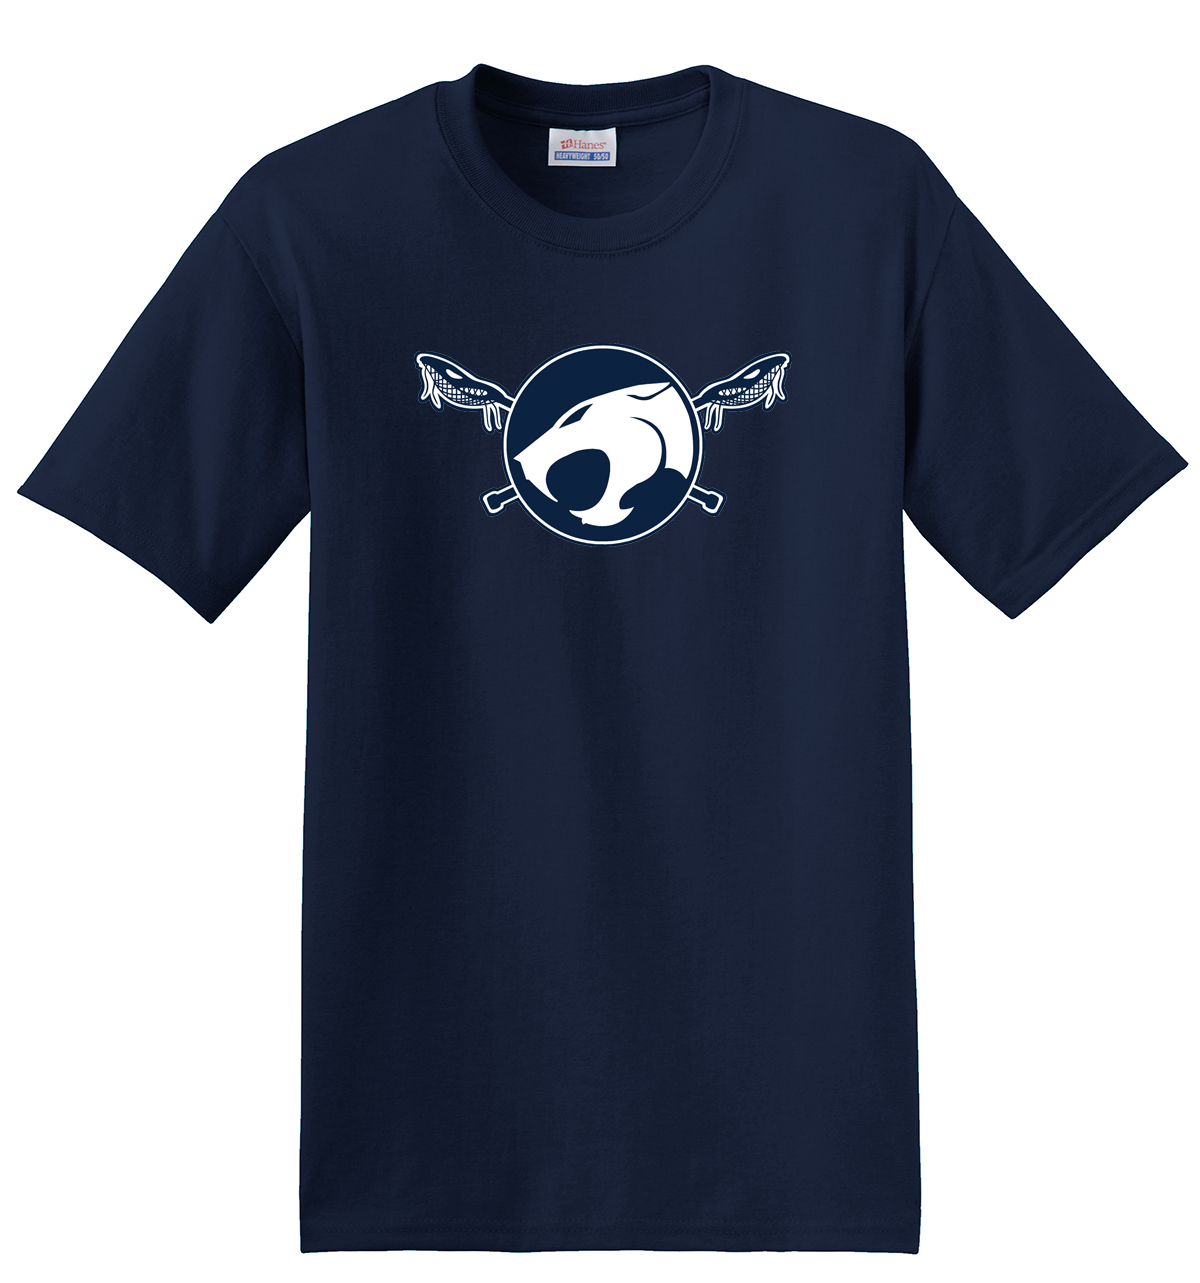 Reitz Lacrosse Navy T-Shirt